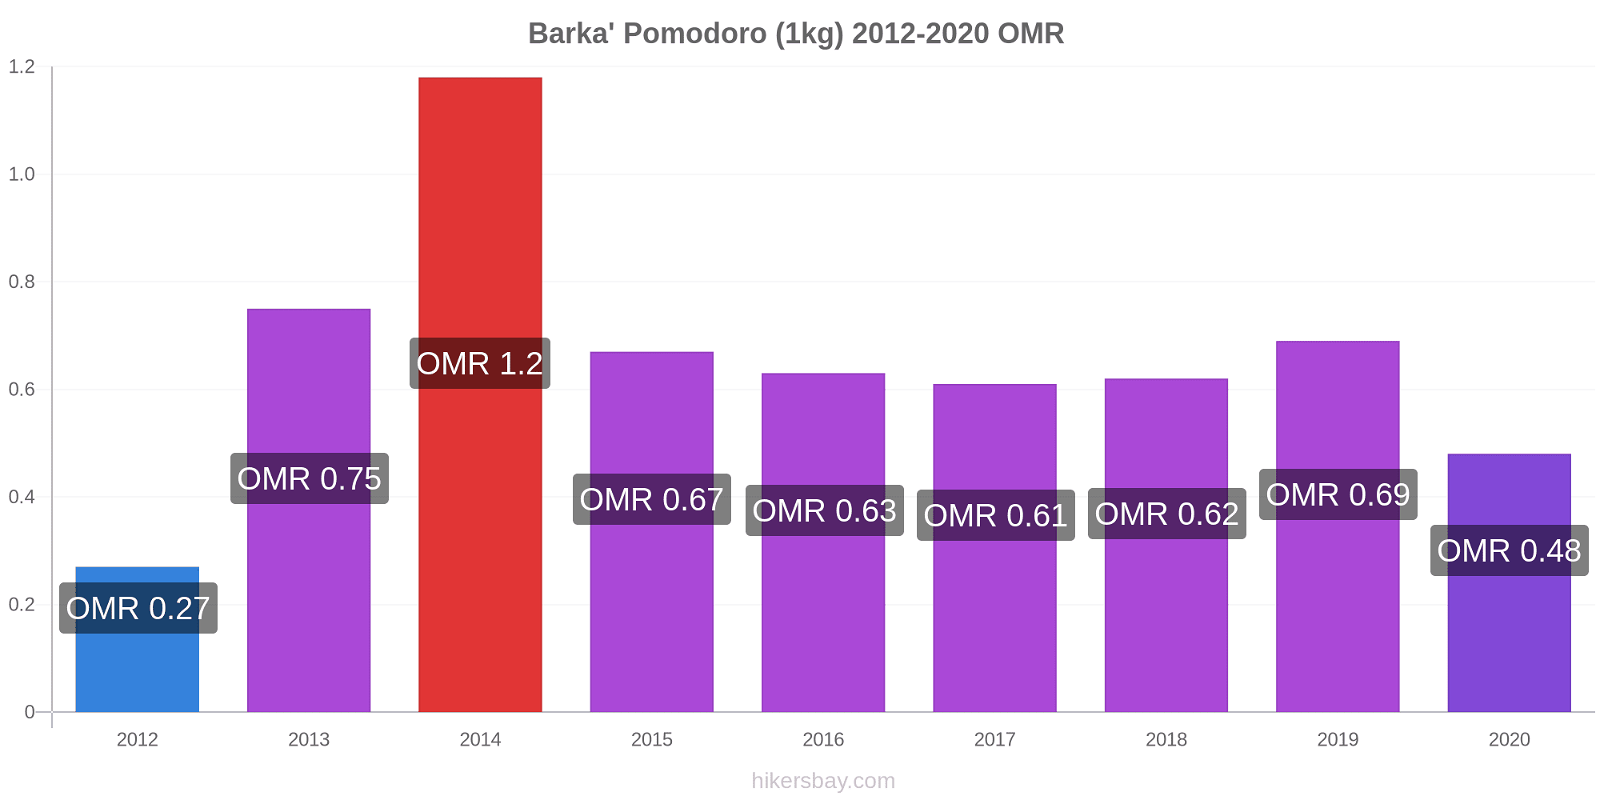 Barka' variazioni di prezzo Pomodoro (1kg) hikersbay.com